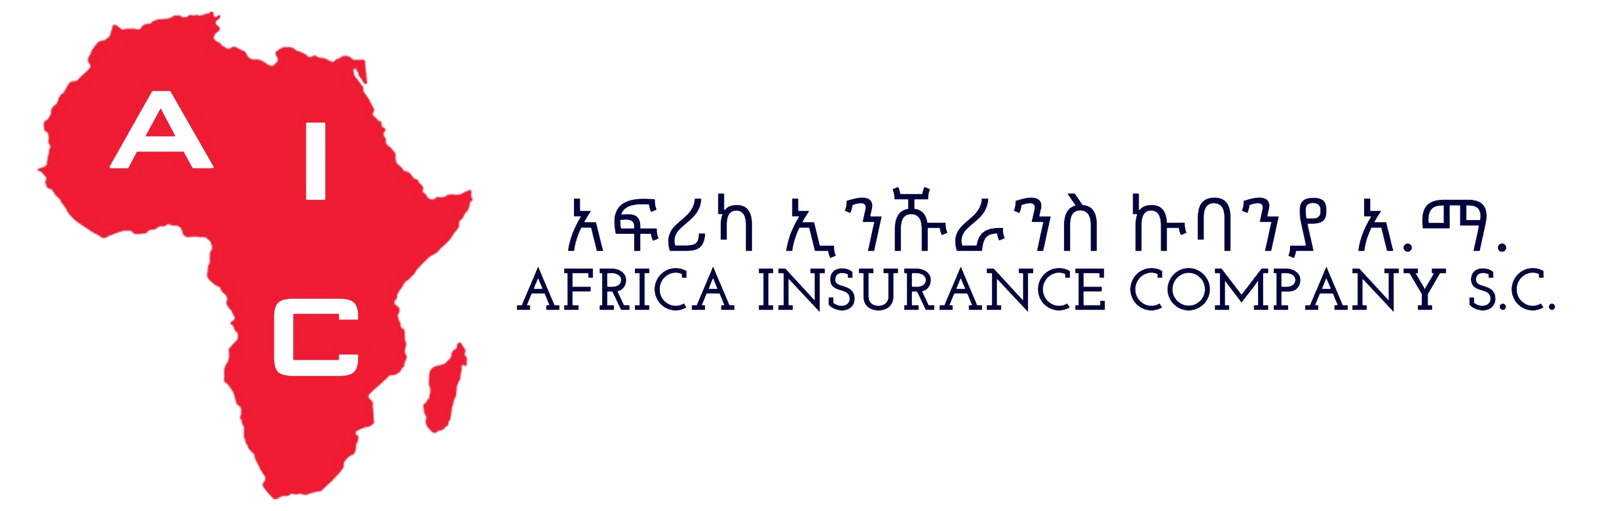 African Insurance Company Ltd